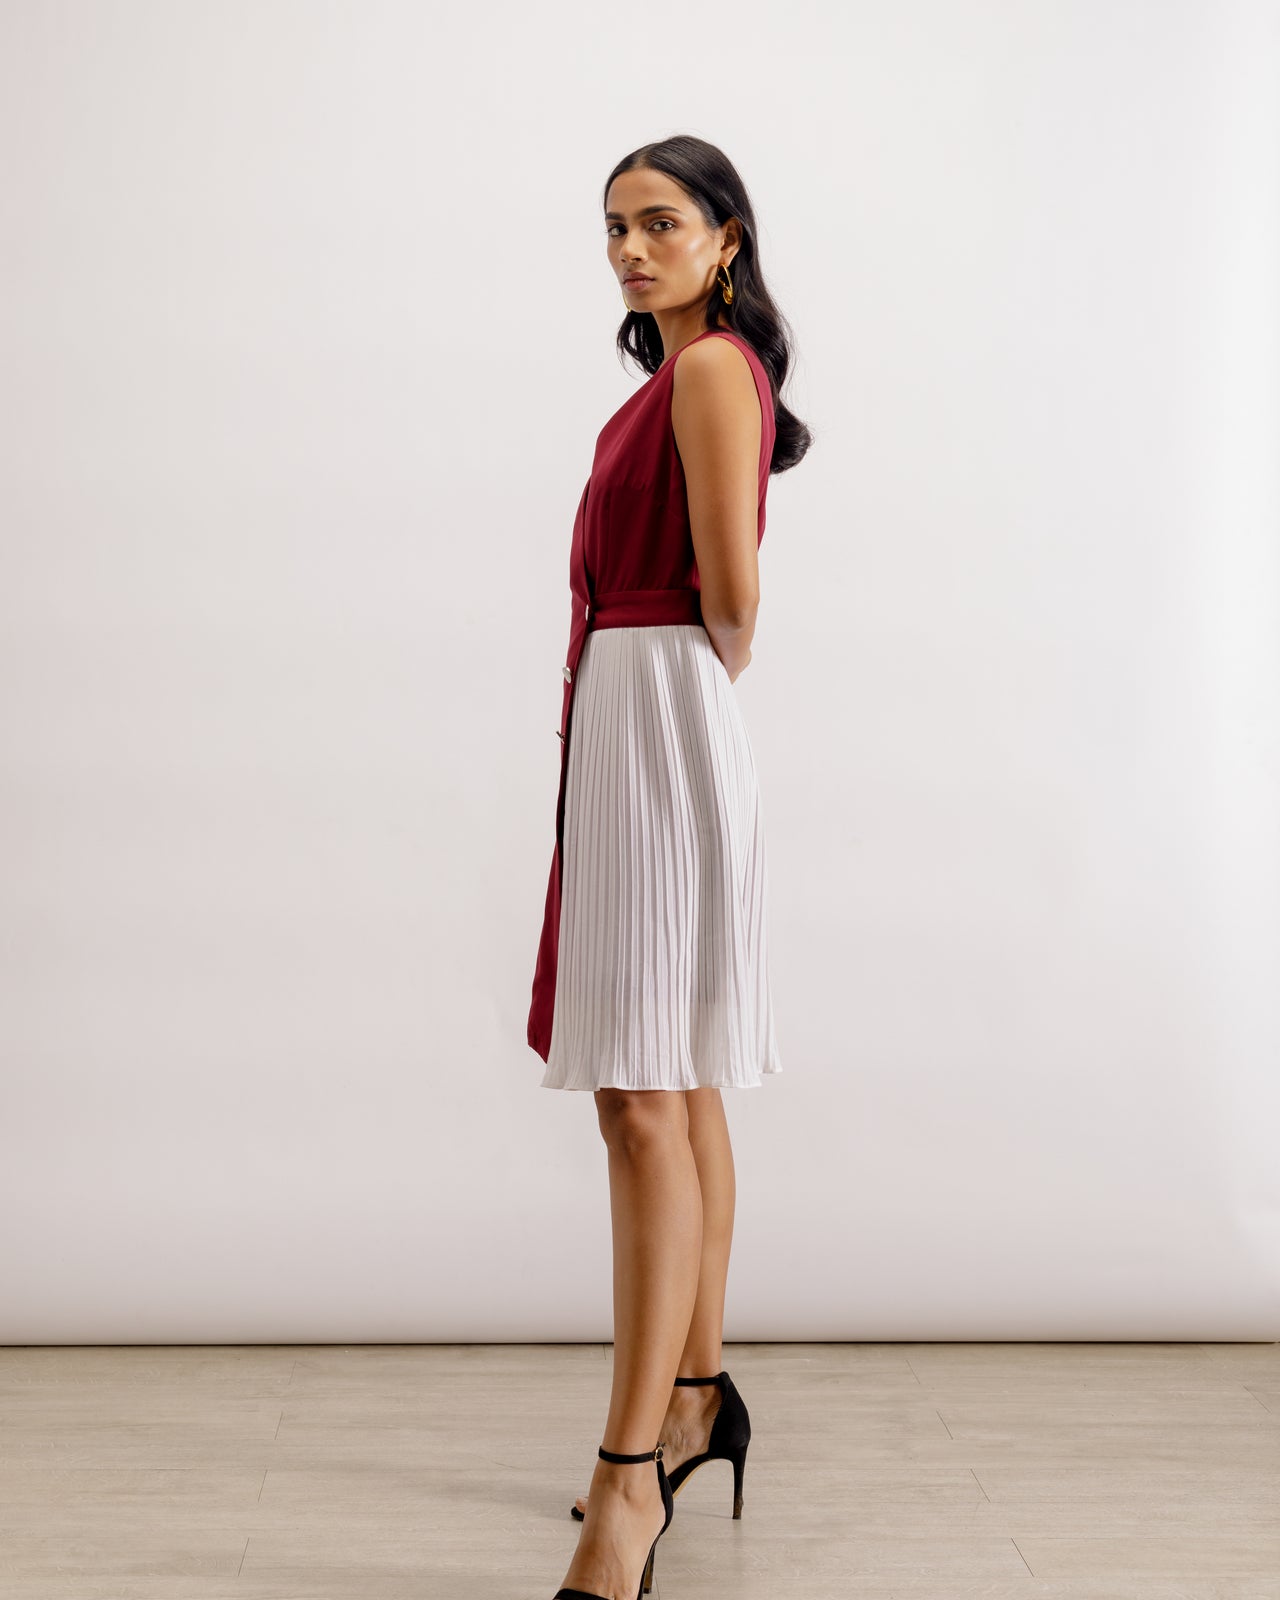 Fashionable Sleeveless Blazer Dress | Red Blazer Dress | Paive